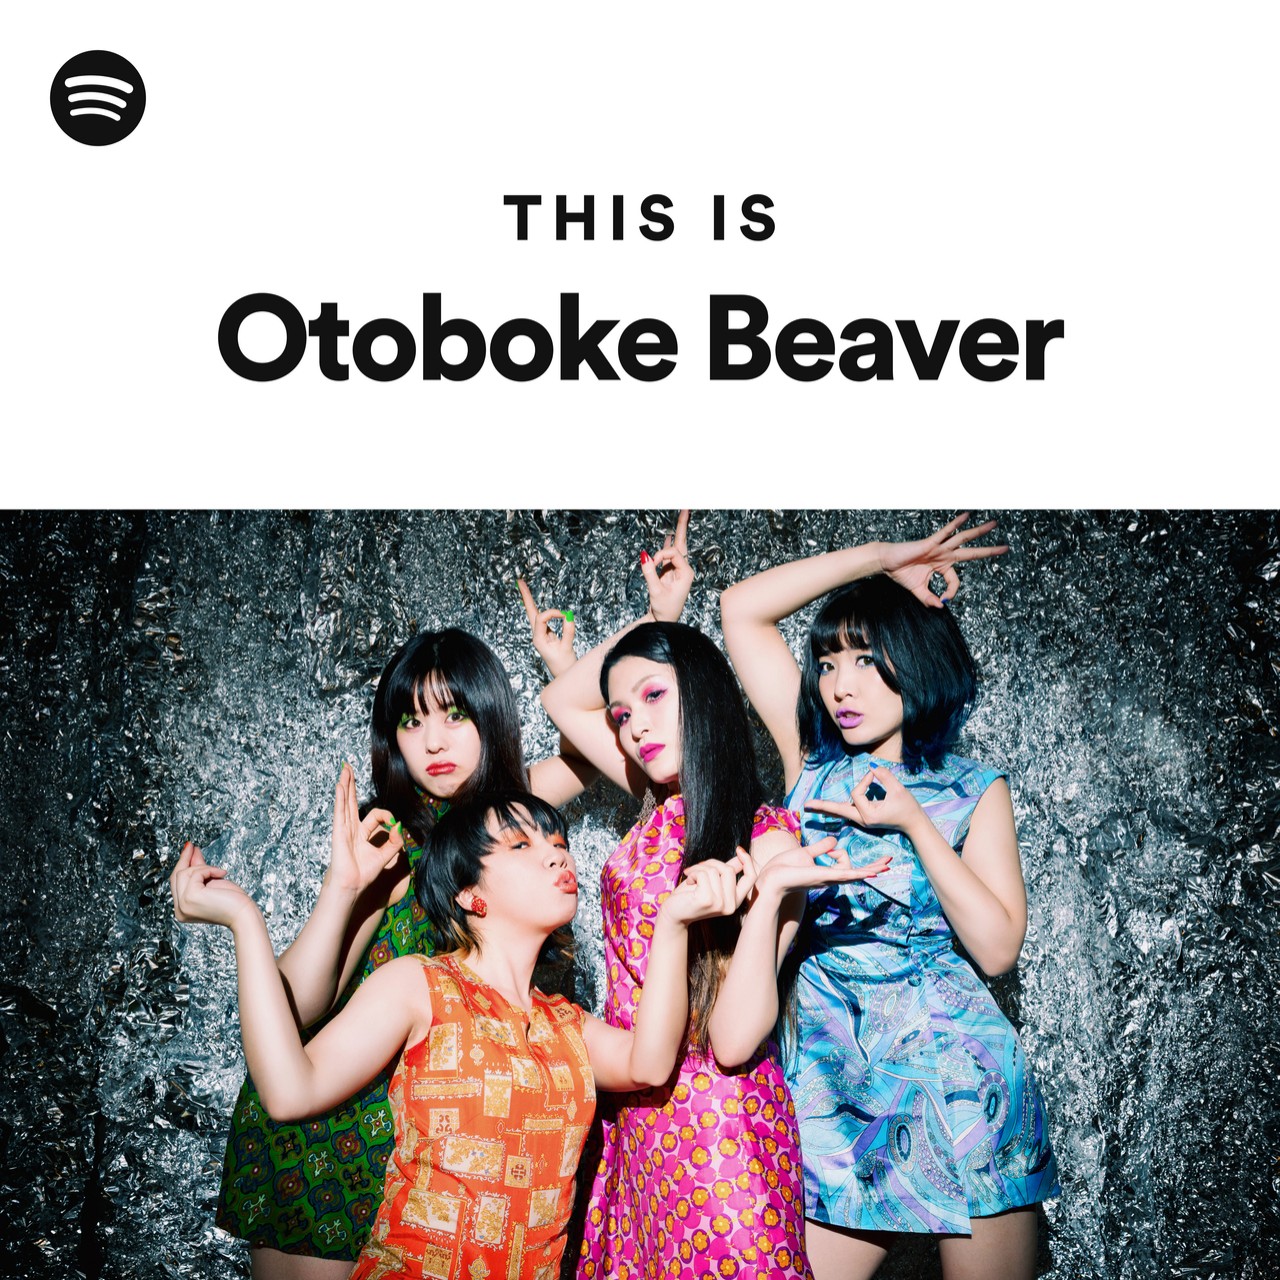 This is Otoboke Beaver